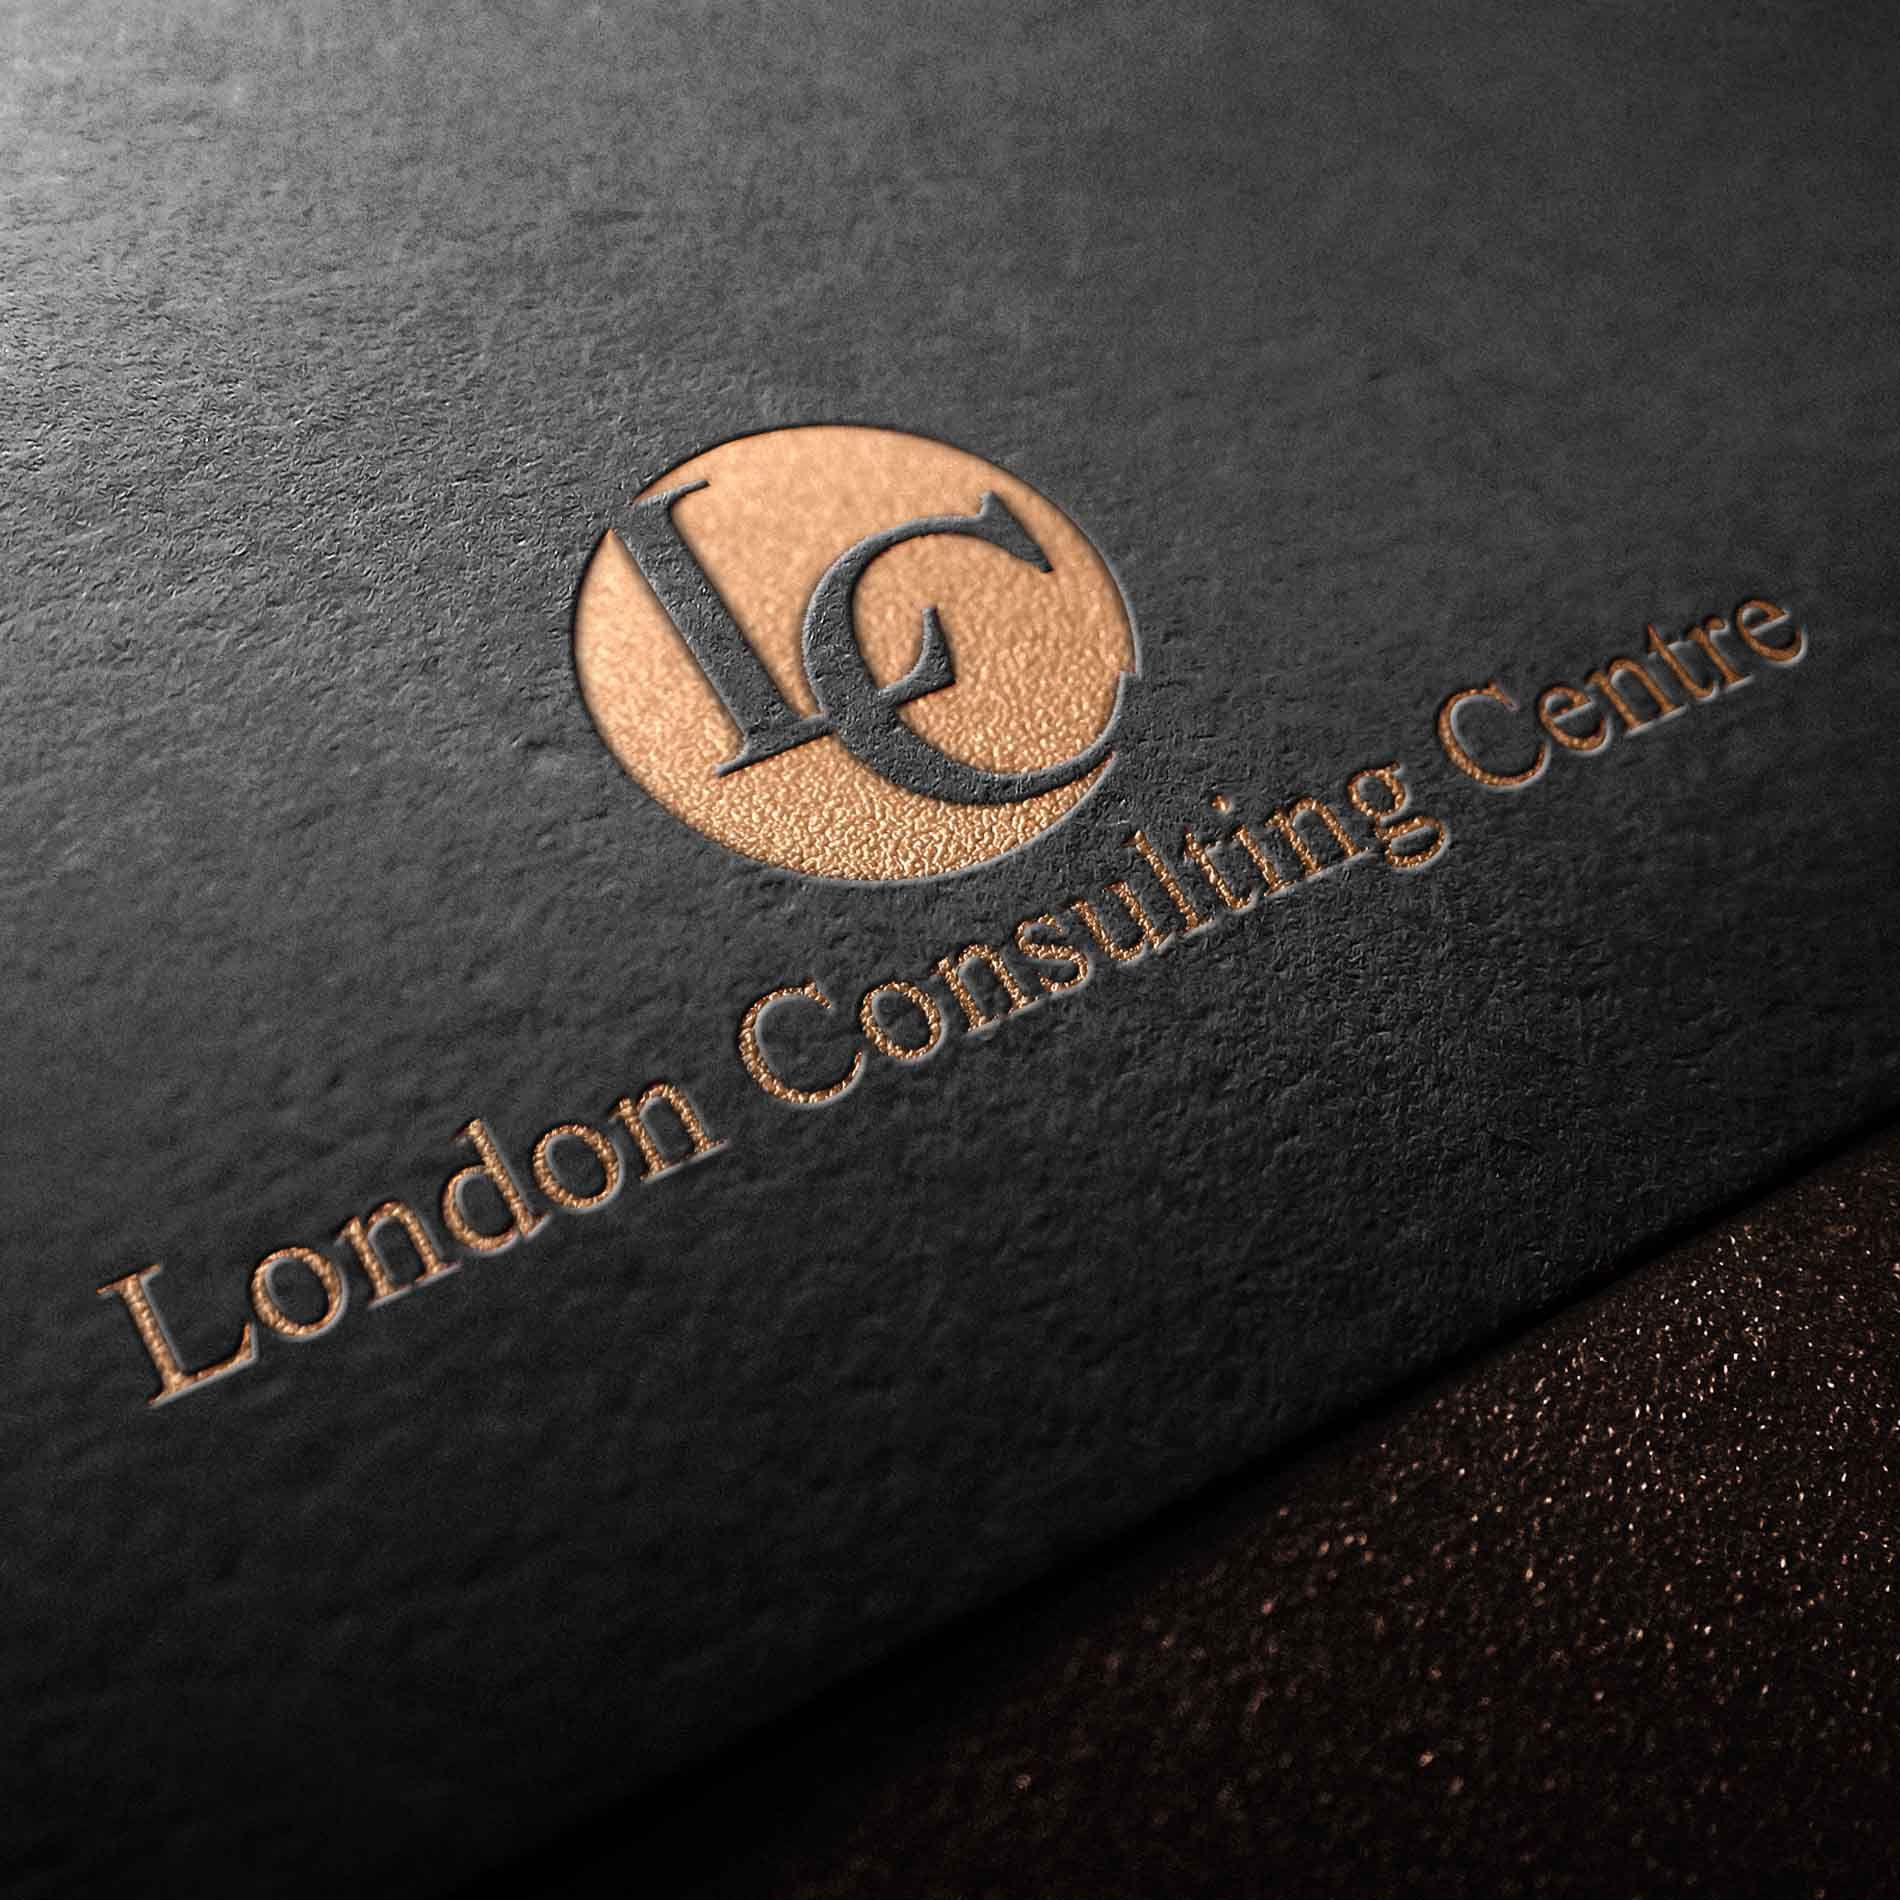 ФС для London Consulting Centre - дизайнер pololo